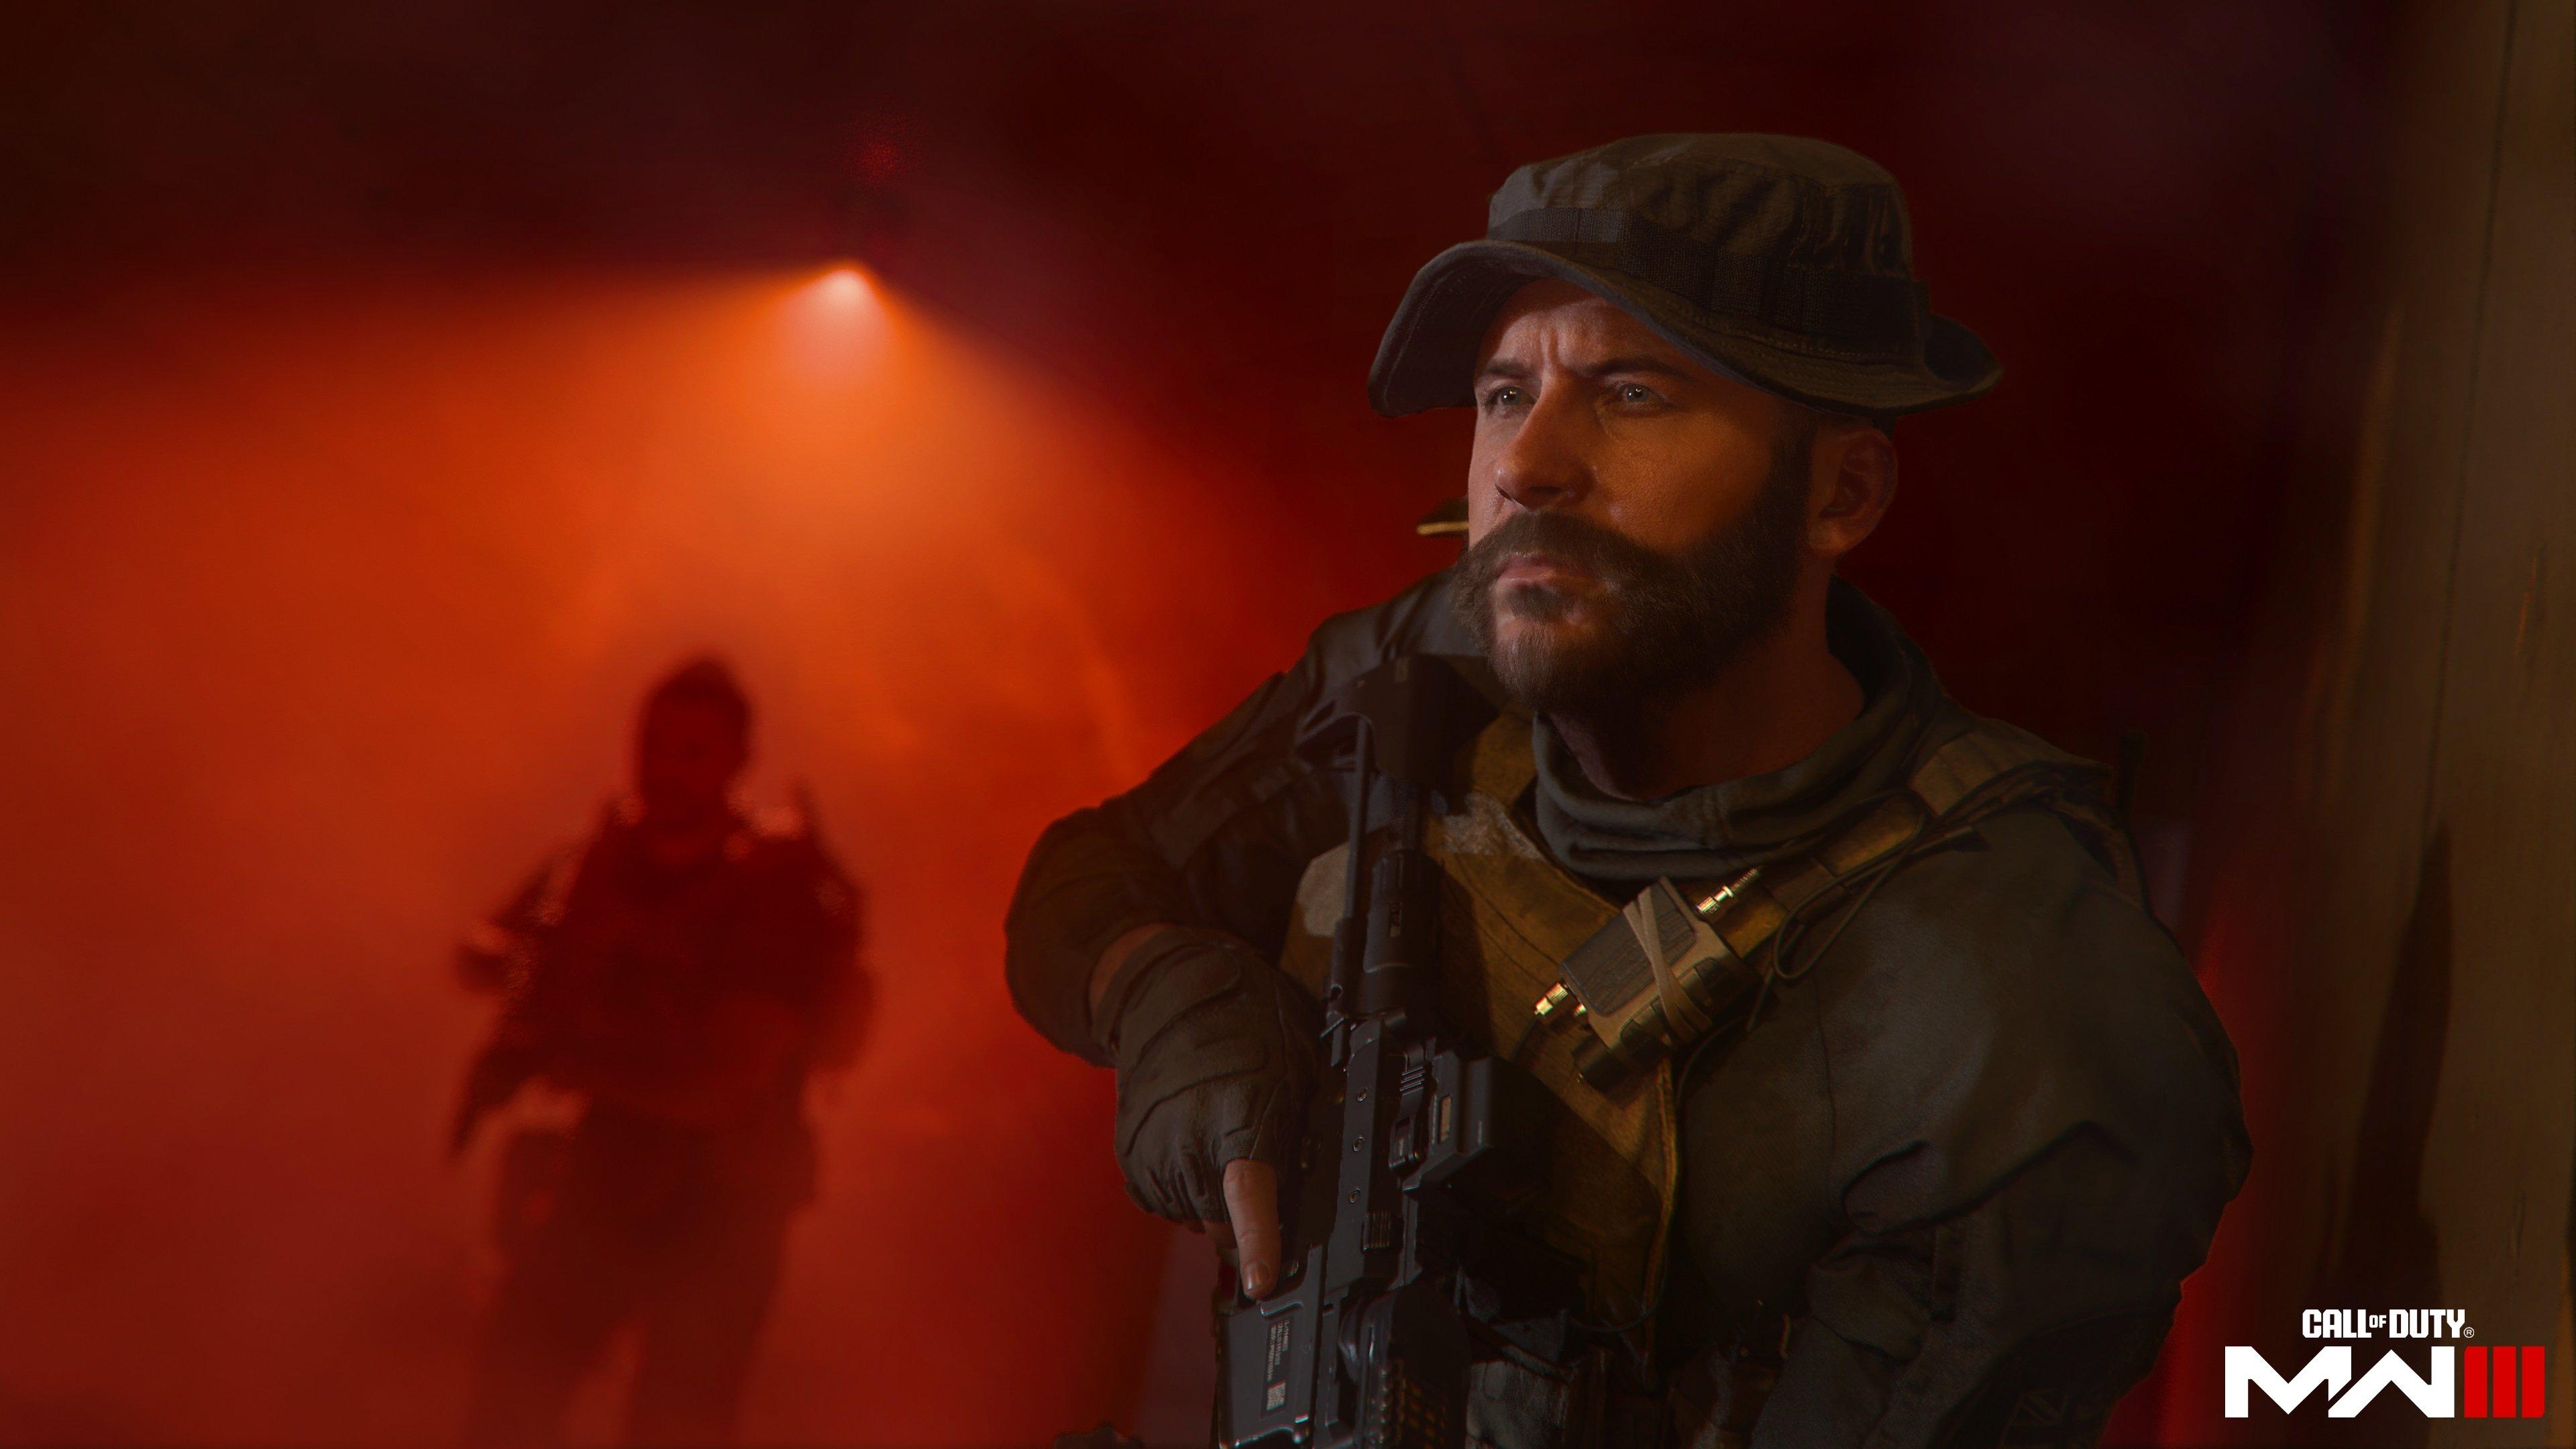 Call of Duty Modern Warfare 3 for PlayStation 4